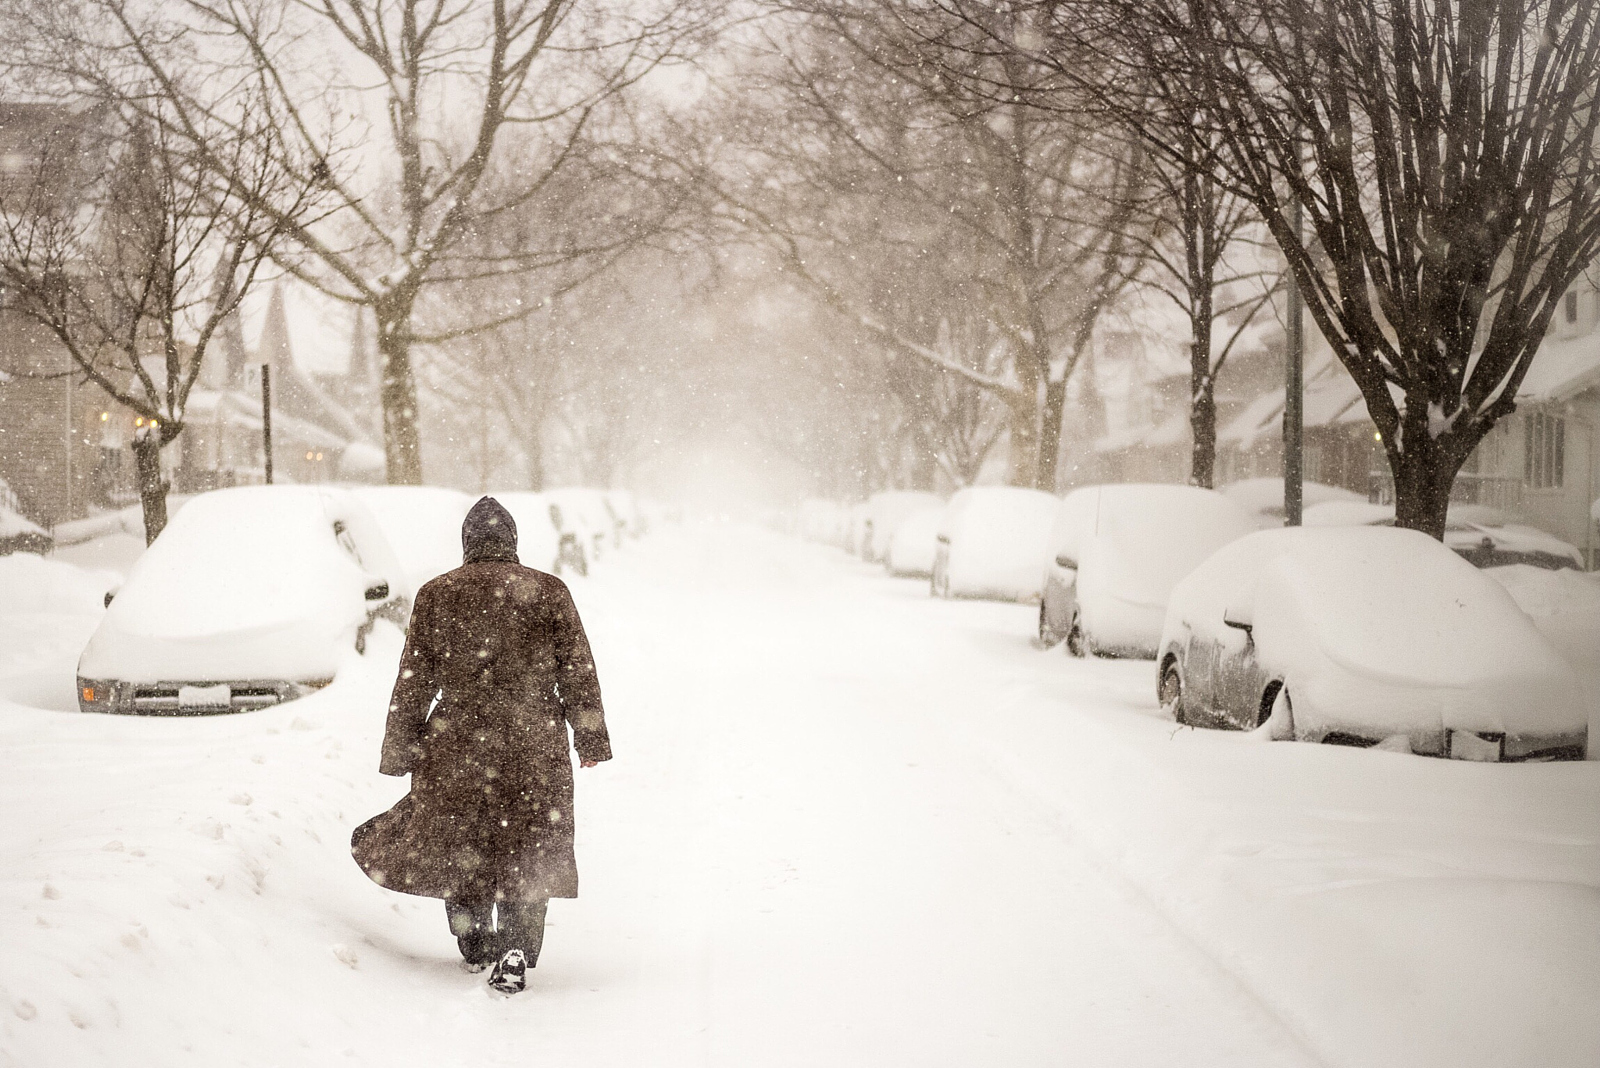 35 Photos of #Blizzard2016 Burying New York City